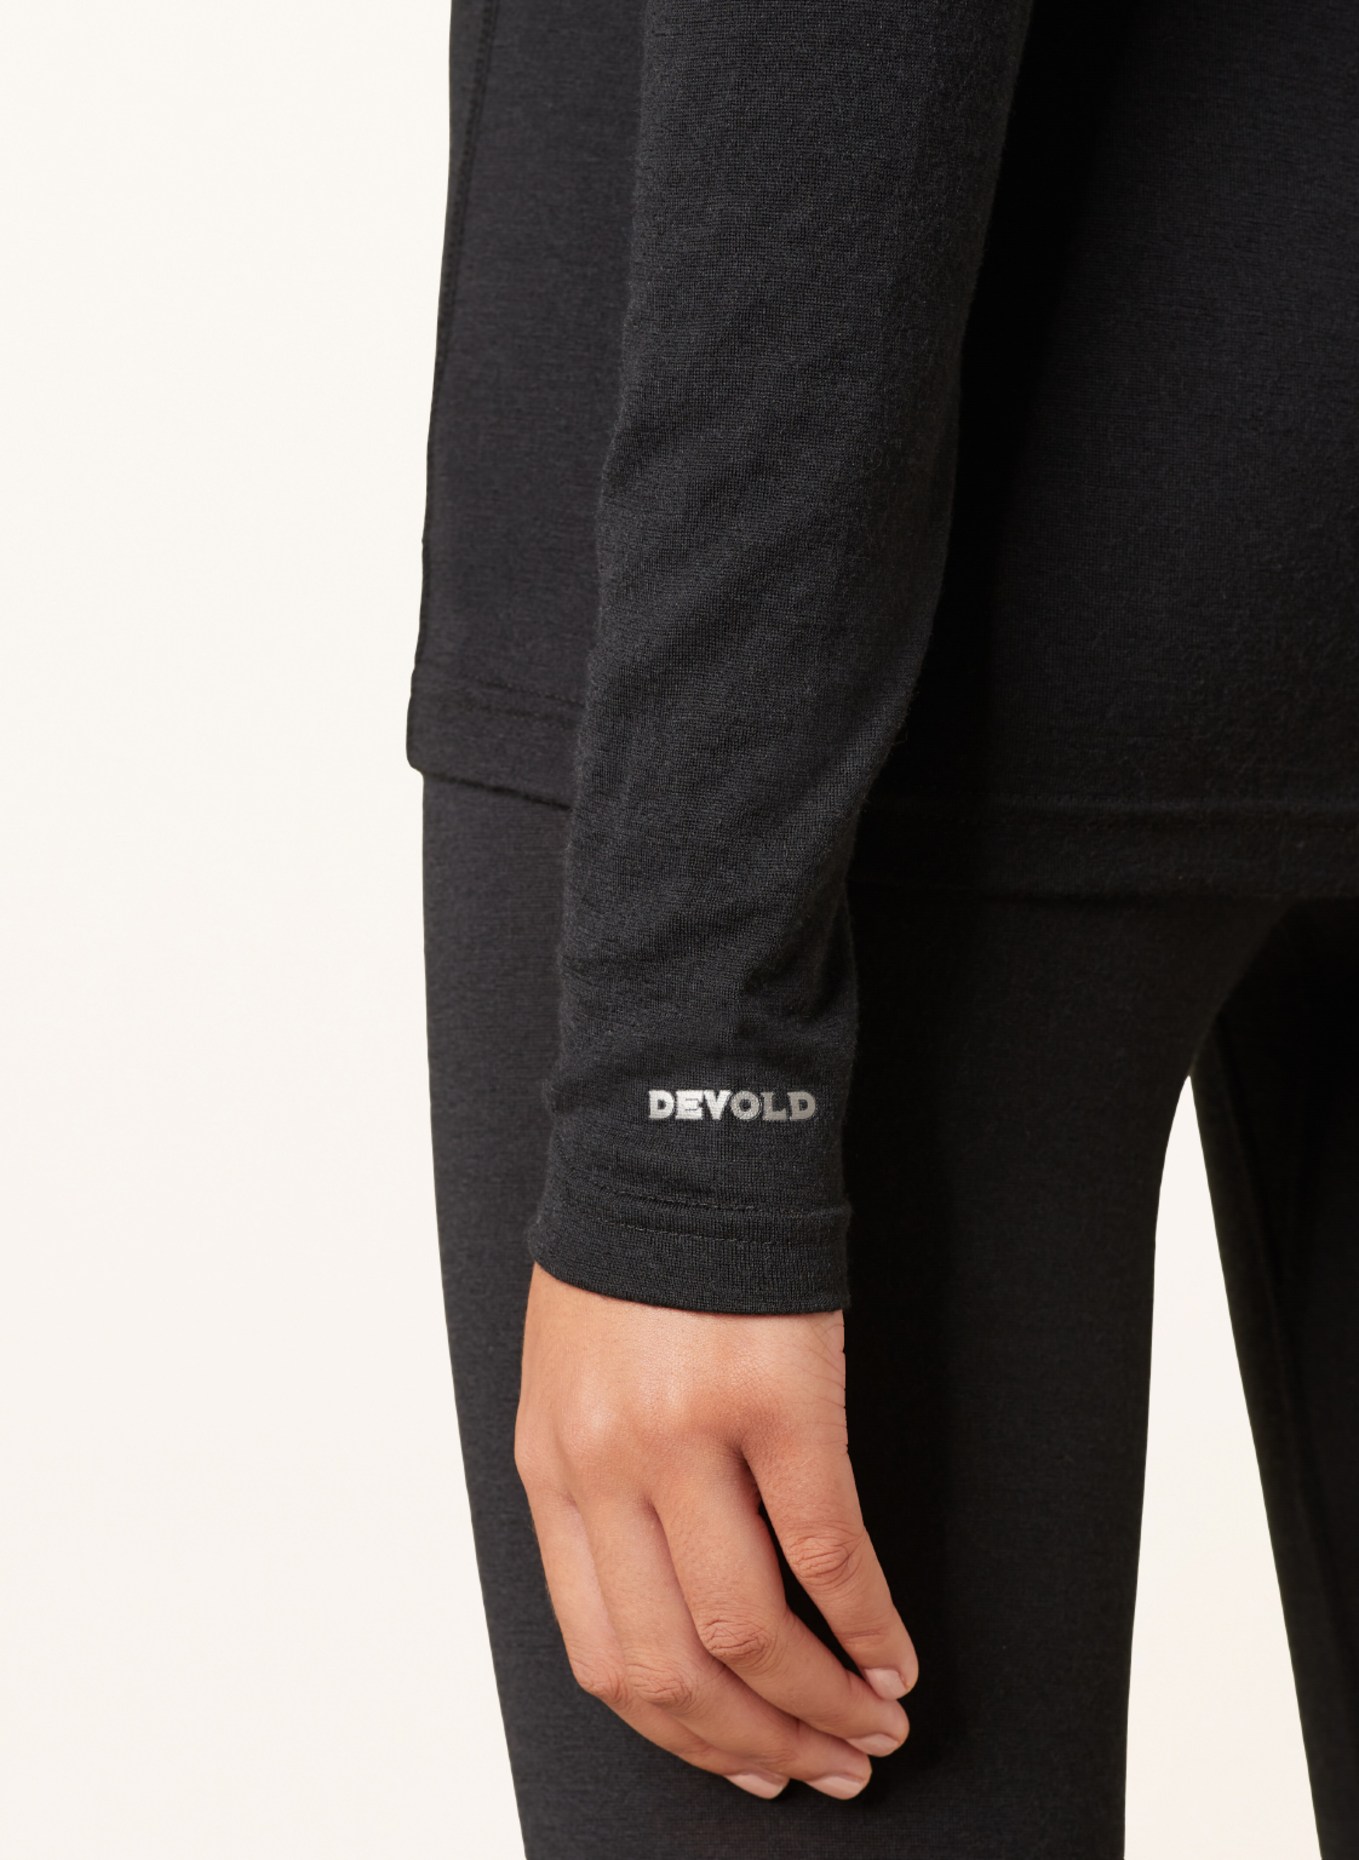 DEVOLD Functional underwear and shirt BREEZE in merino wool, Color: BLACK (Image 4)